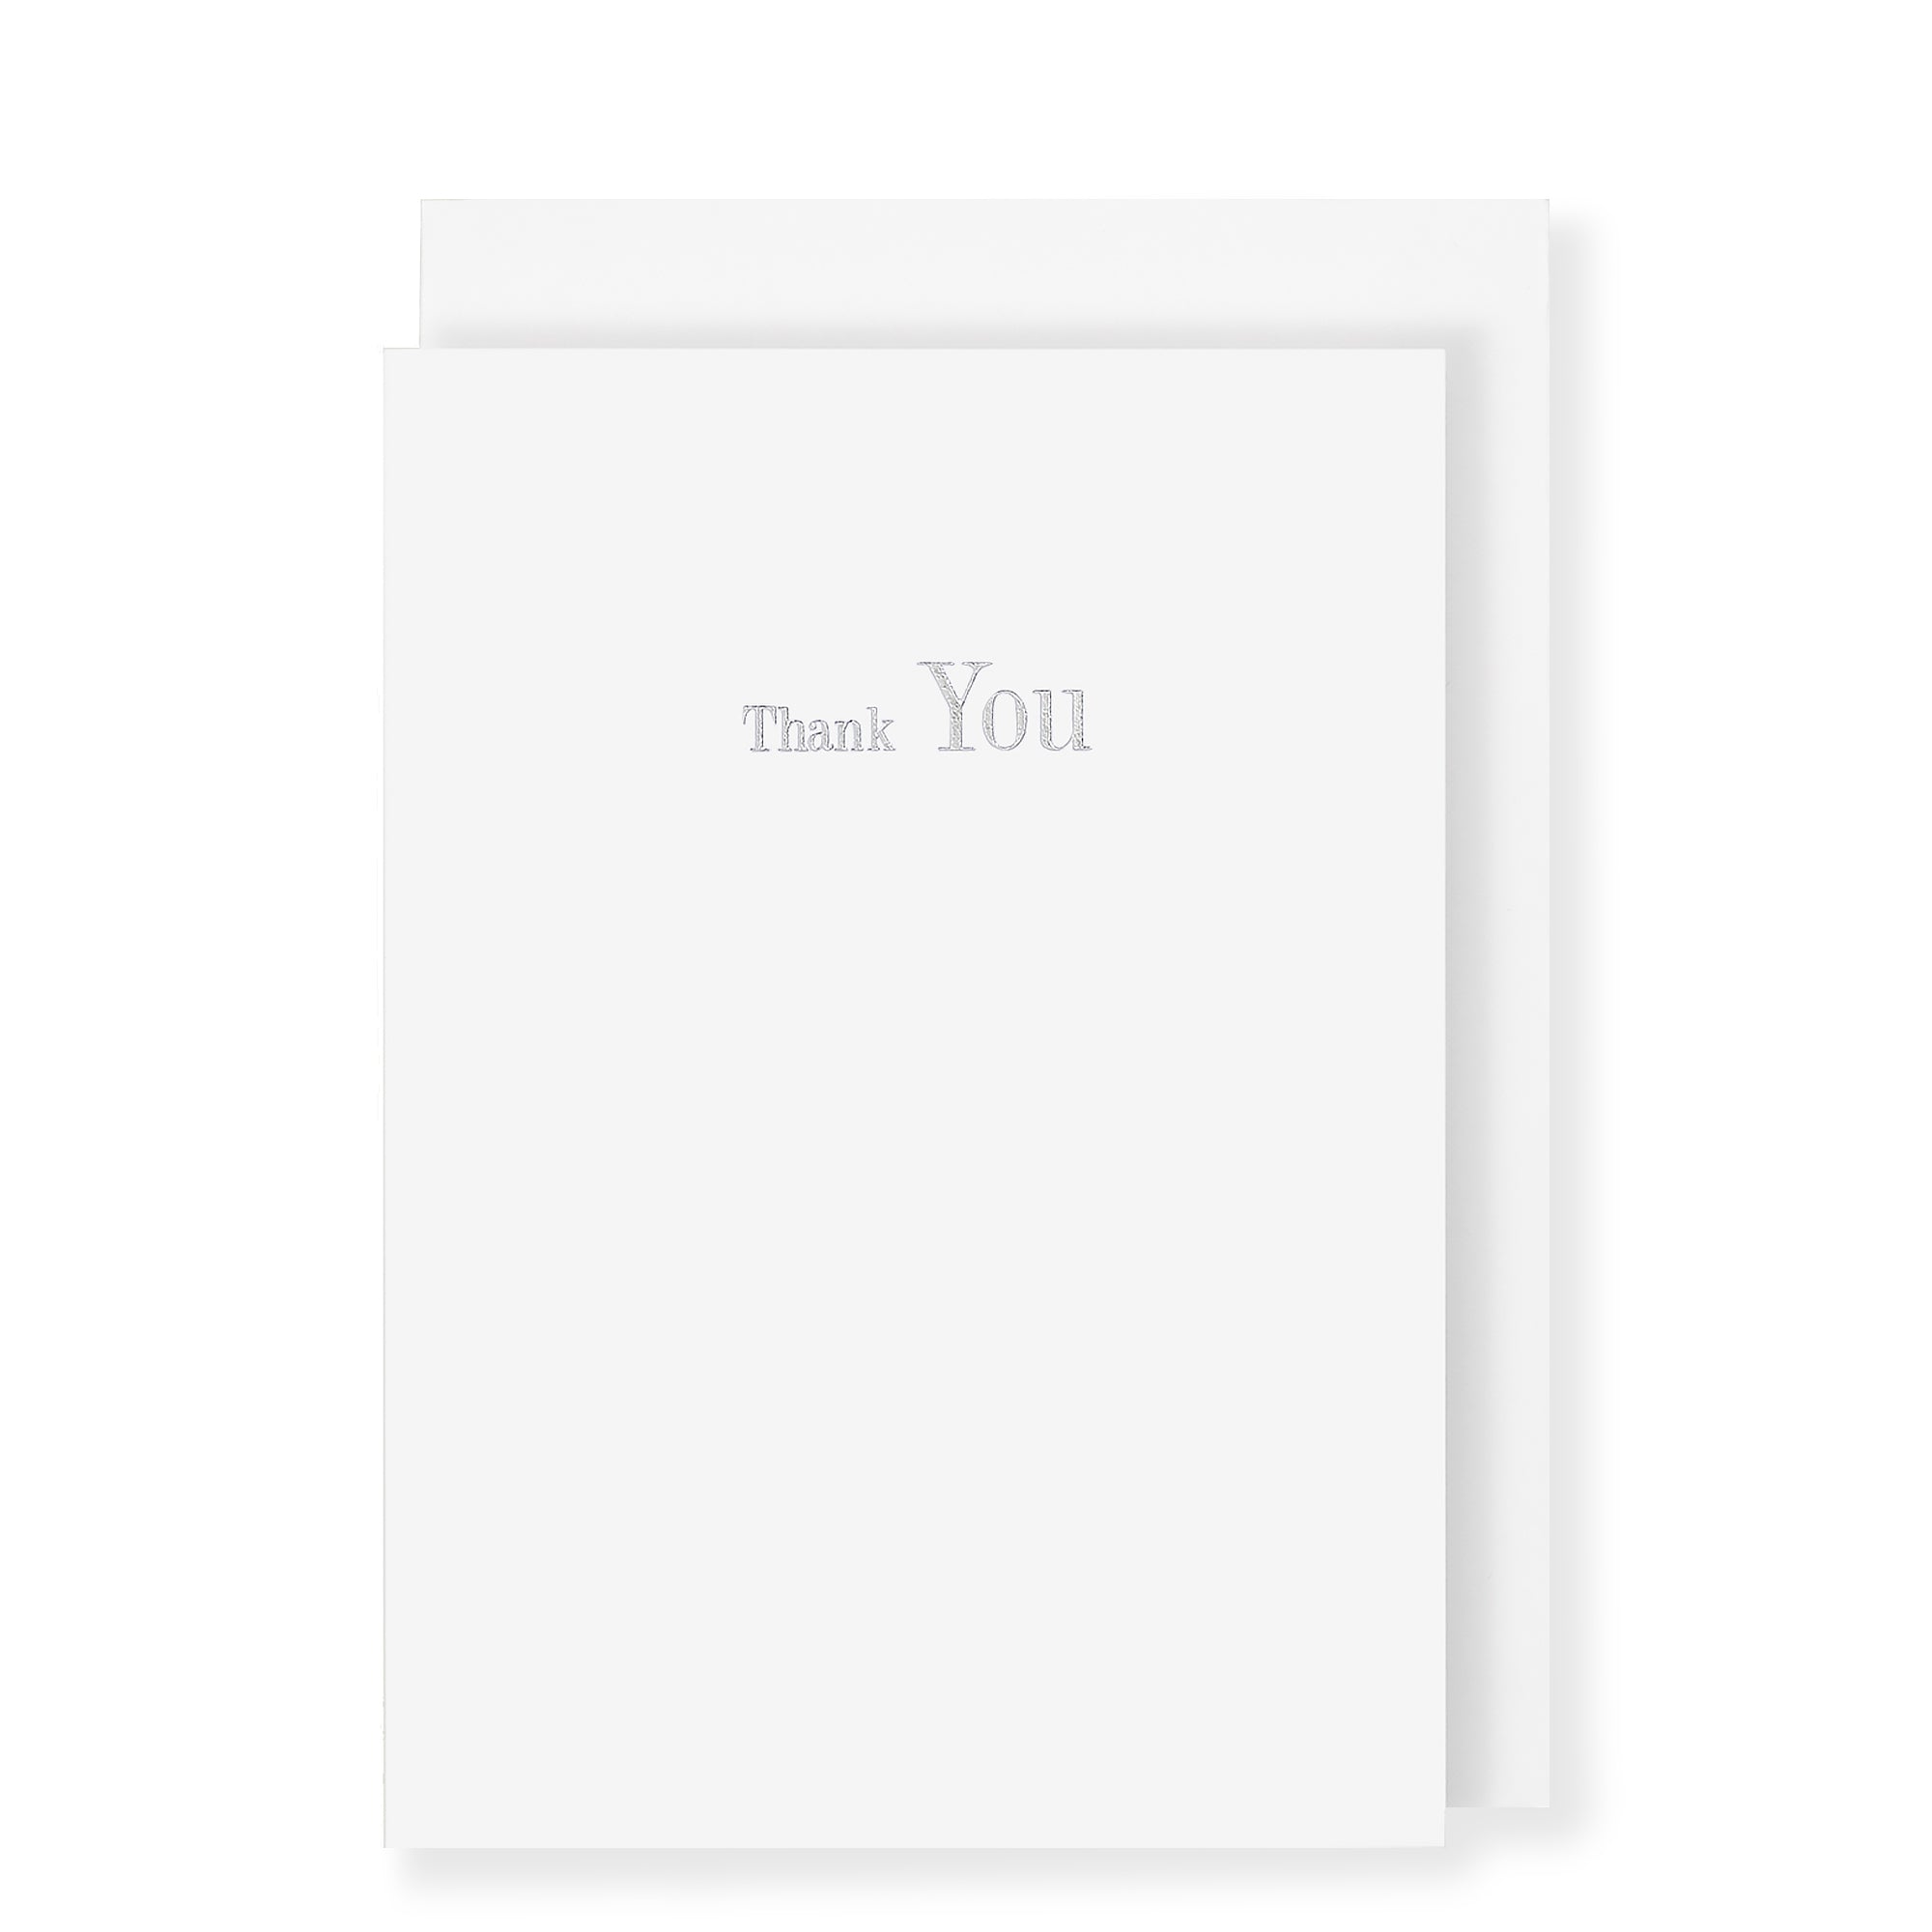 Thank You Card, White